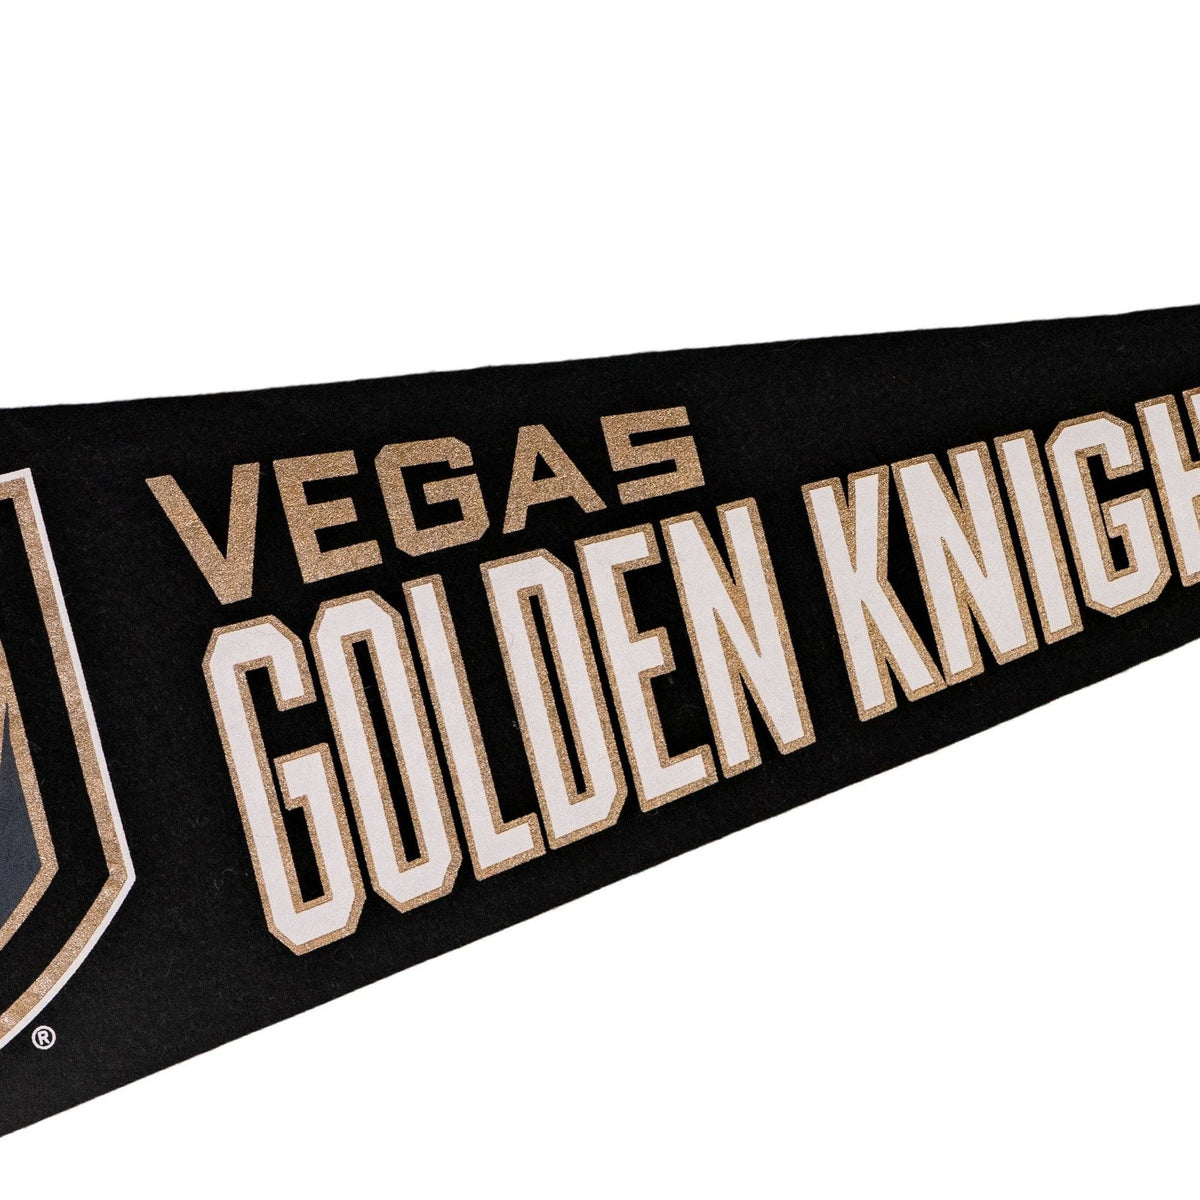 Vegas Golden Knights Pennant